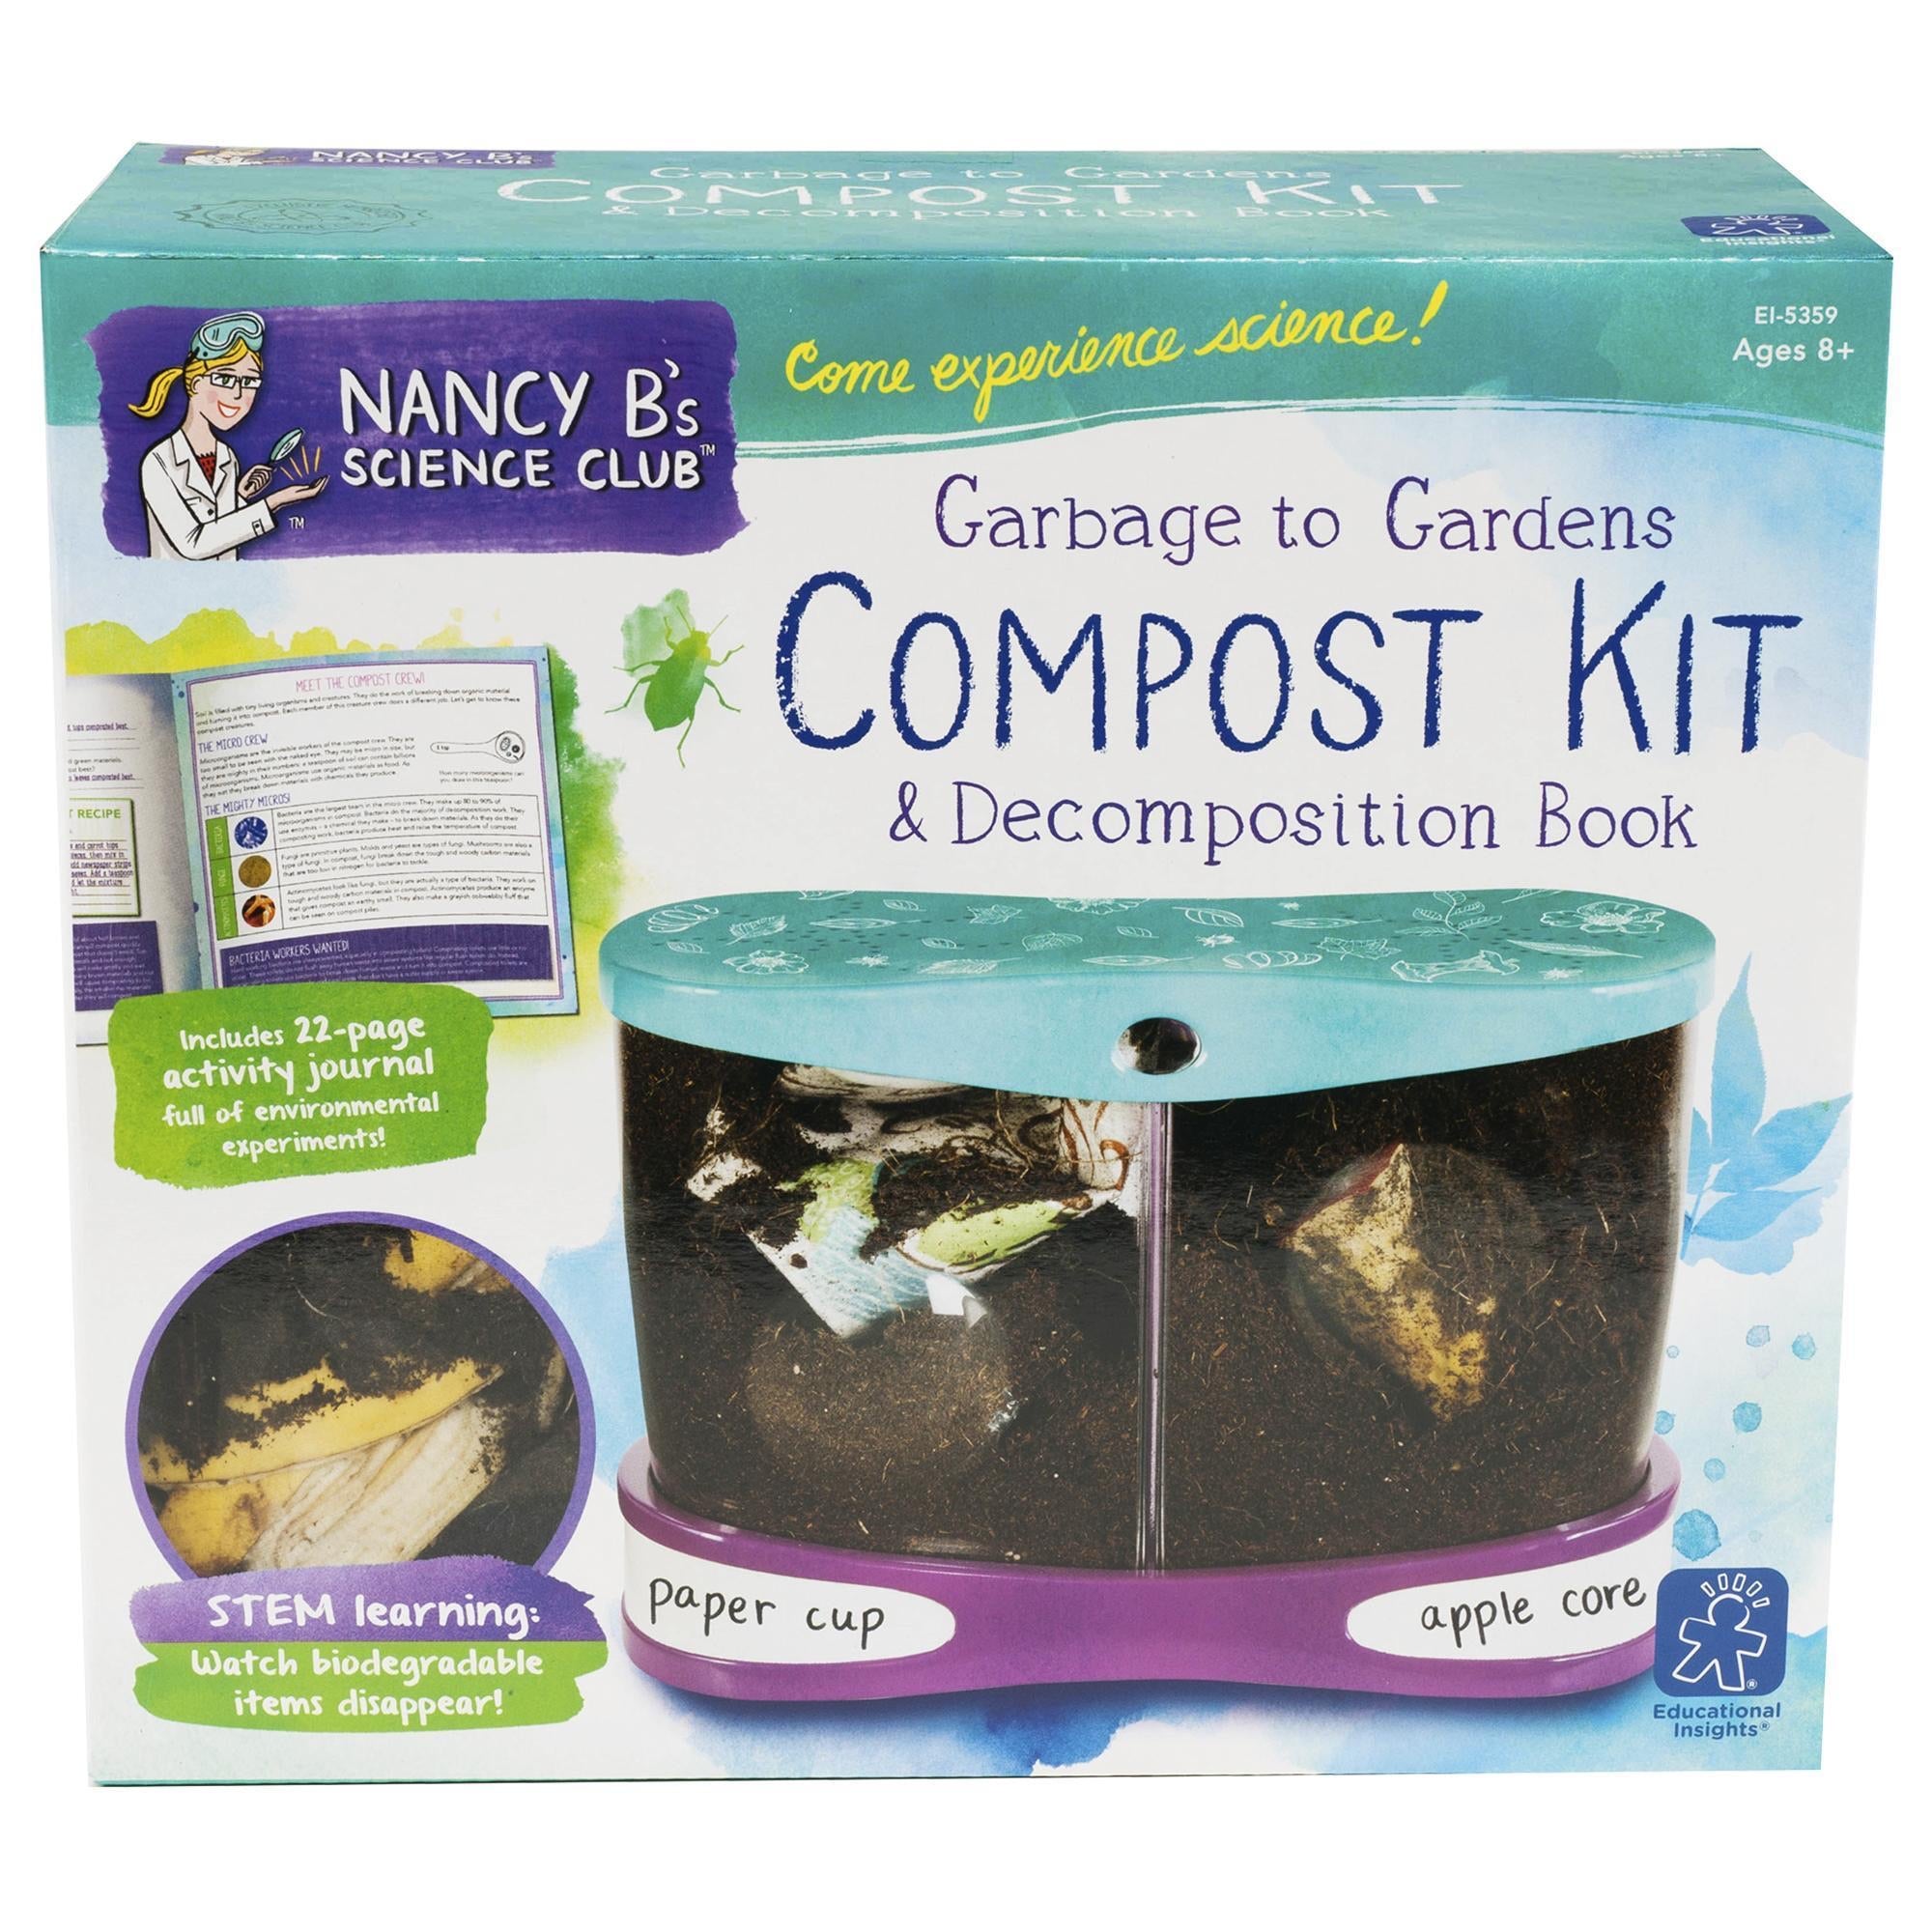 Compost Kit